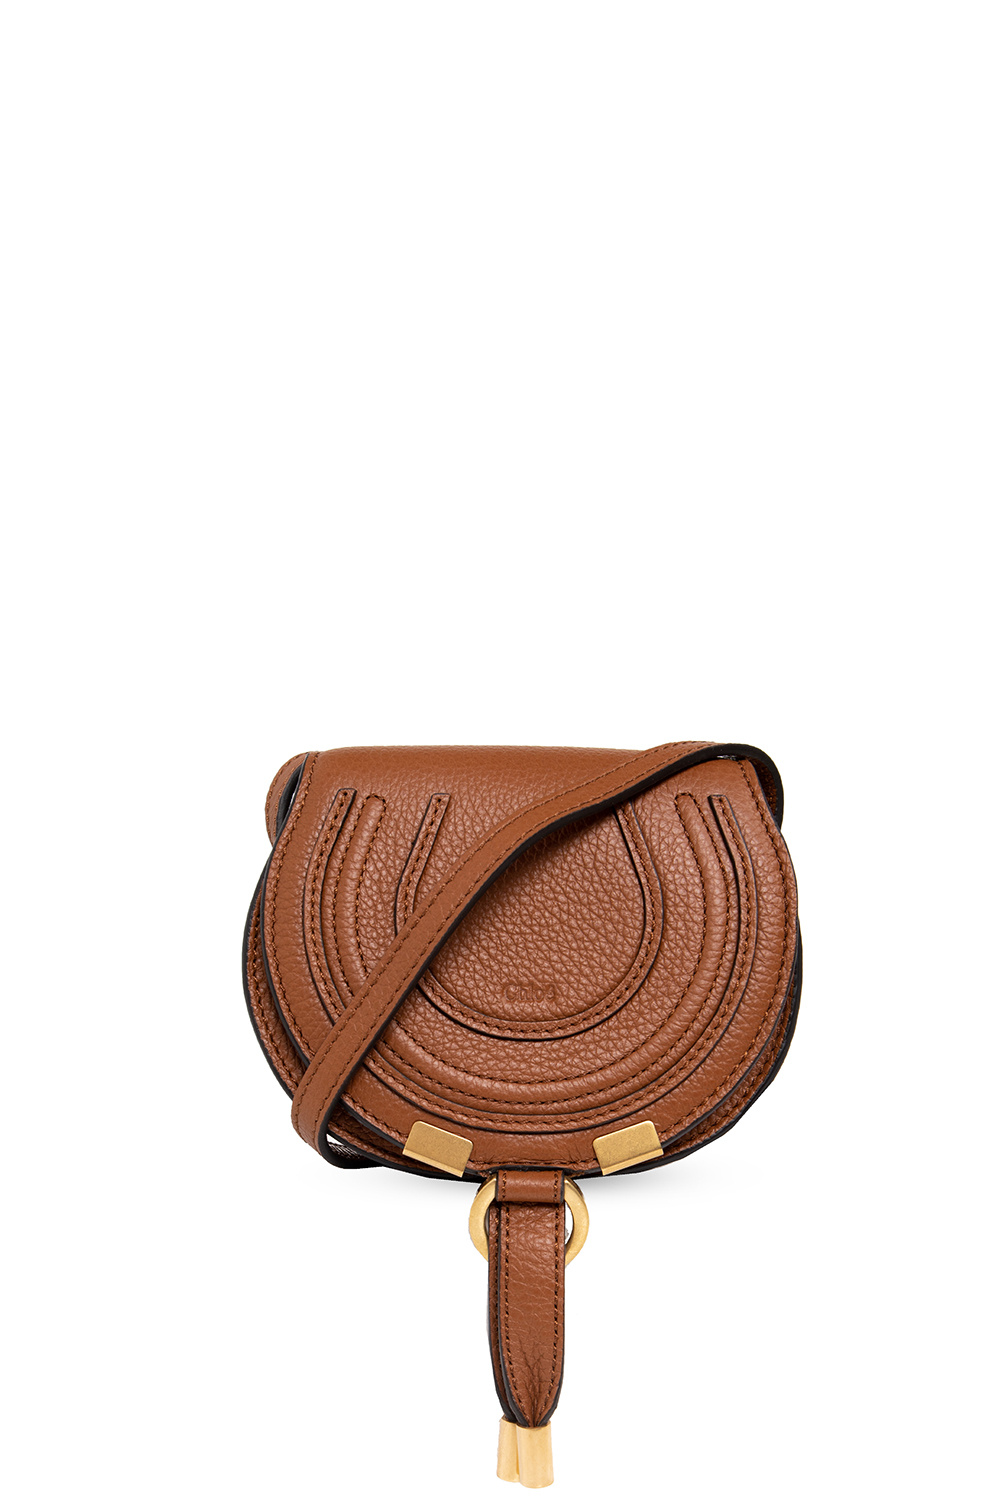 CHLOÉ + NET SUSTAIN Marcie mini textured-leather shoulder bag